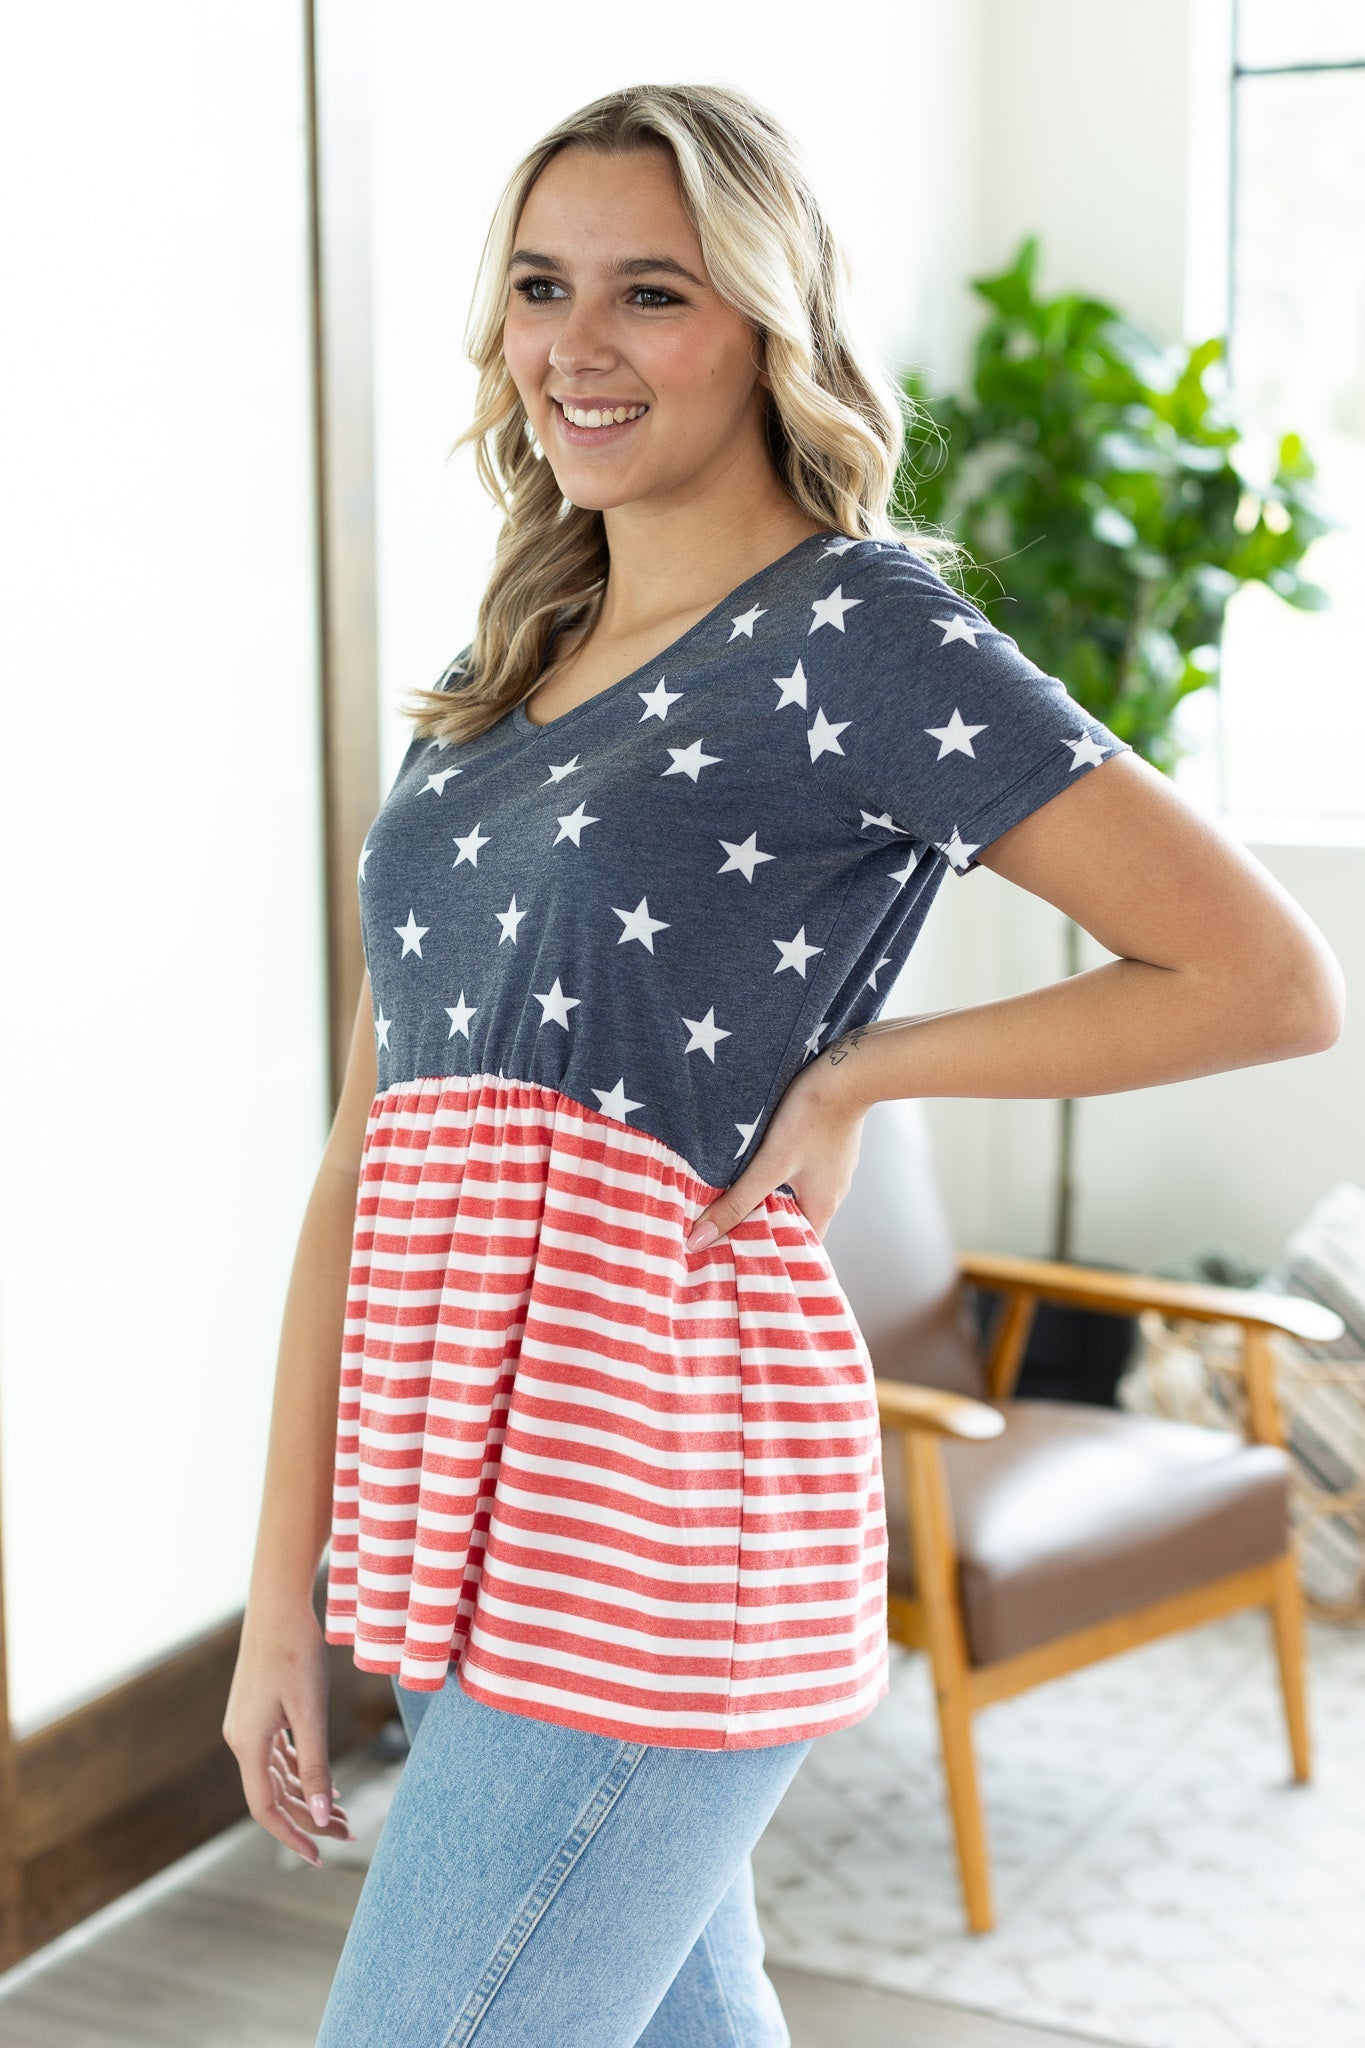 Sarah Ruffle Top - Stars and Stripes